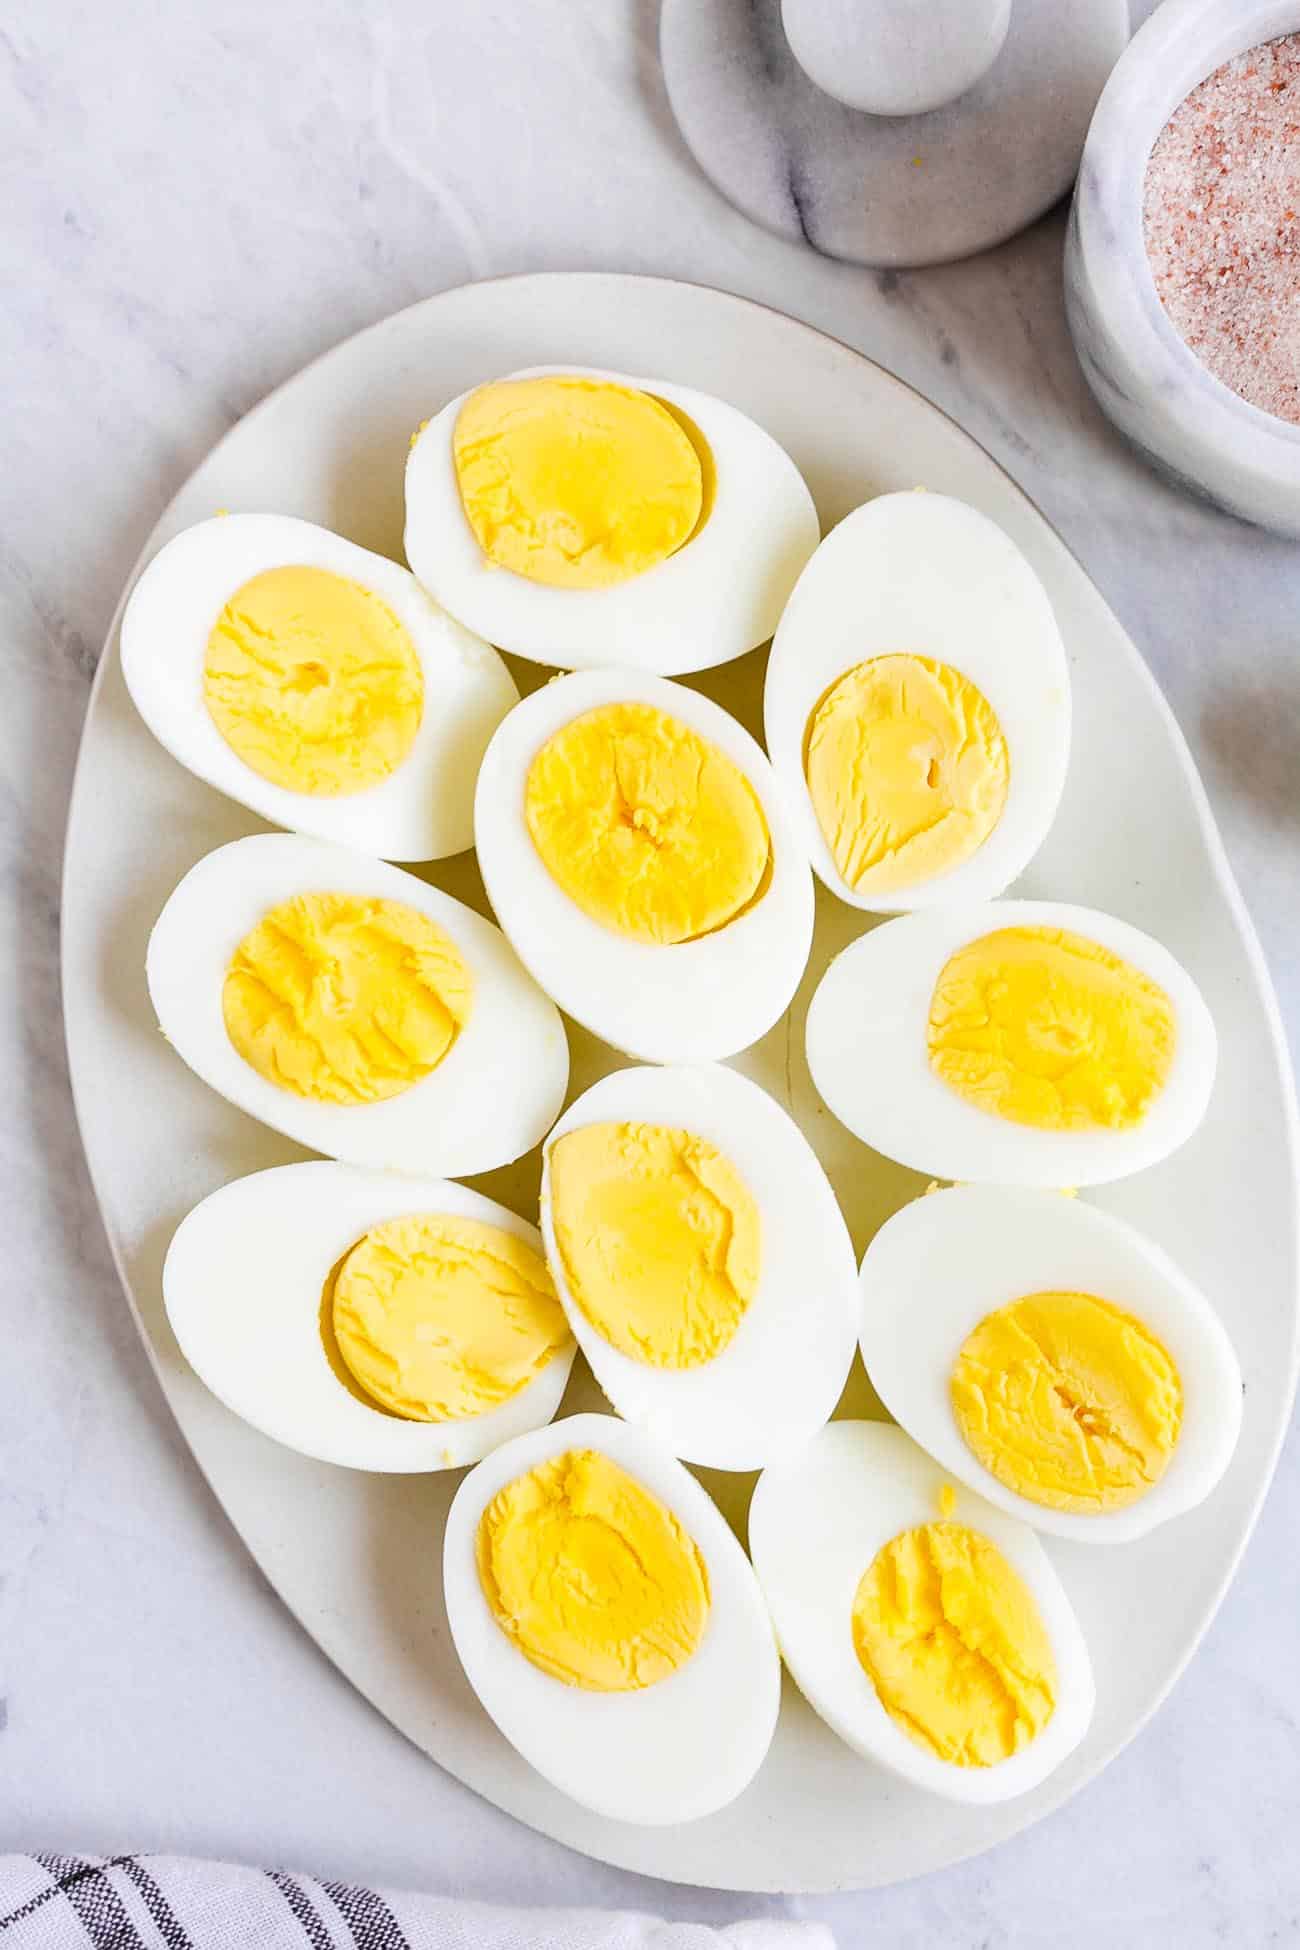 A platter of eggs cut in half.